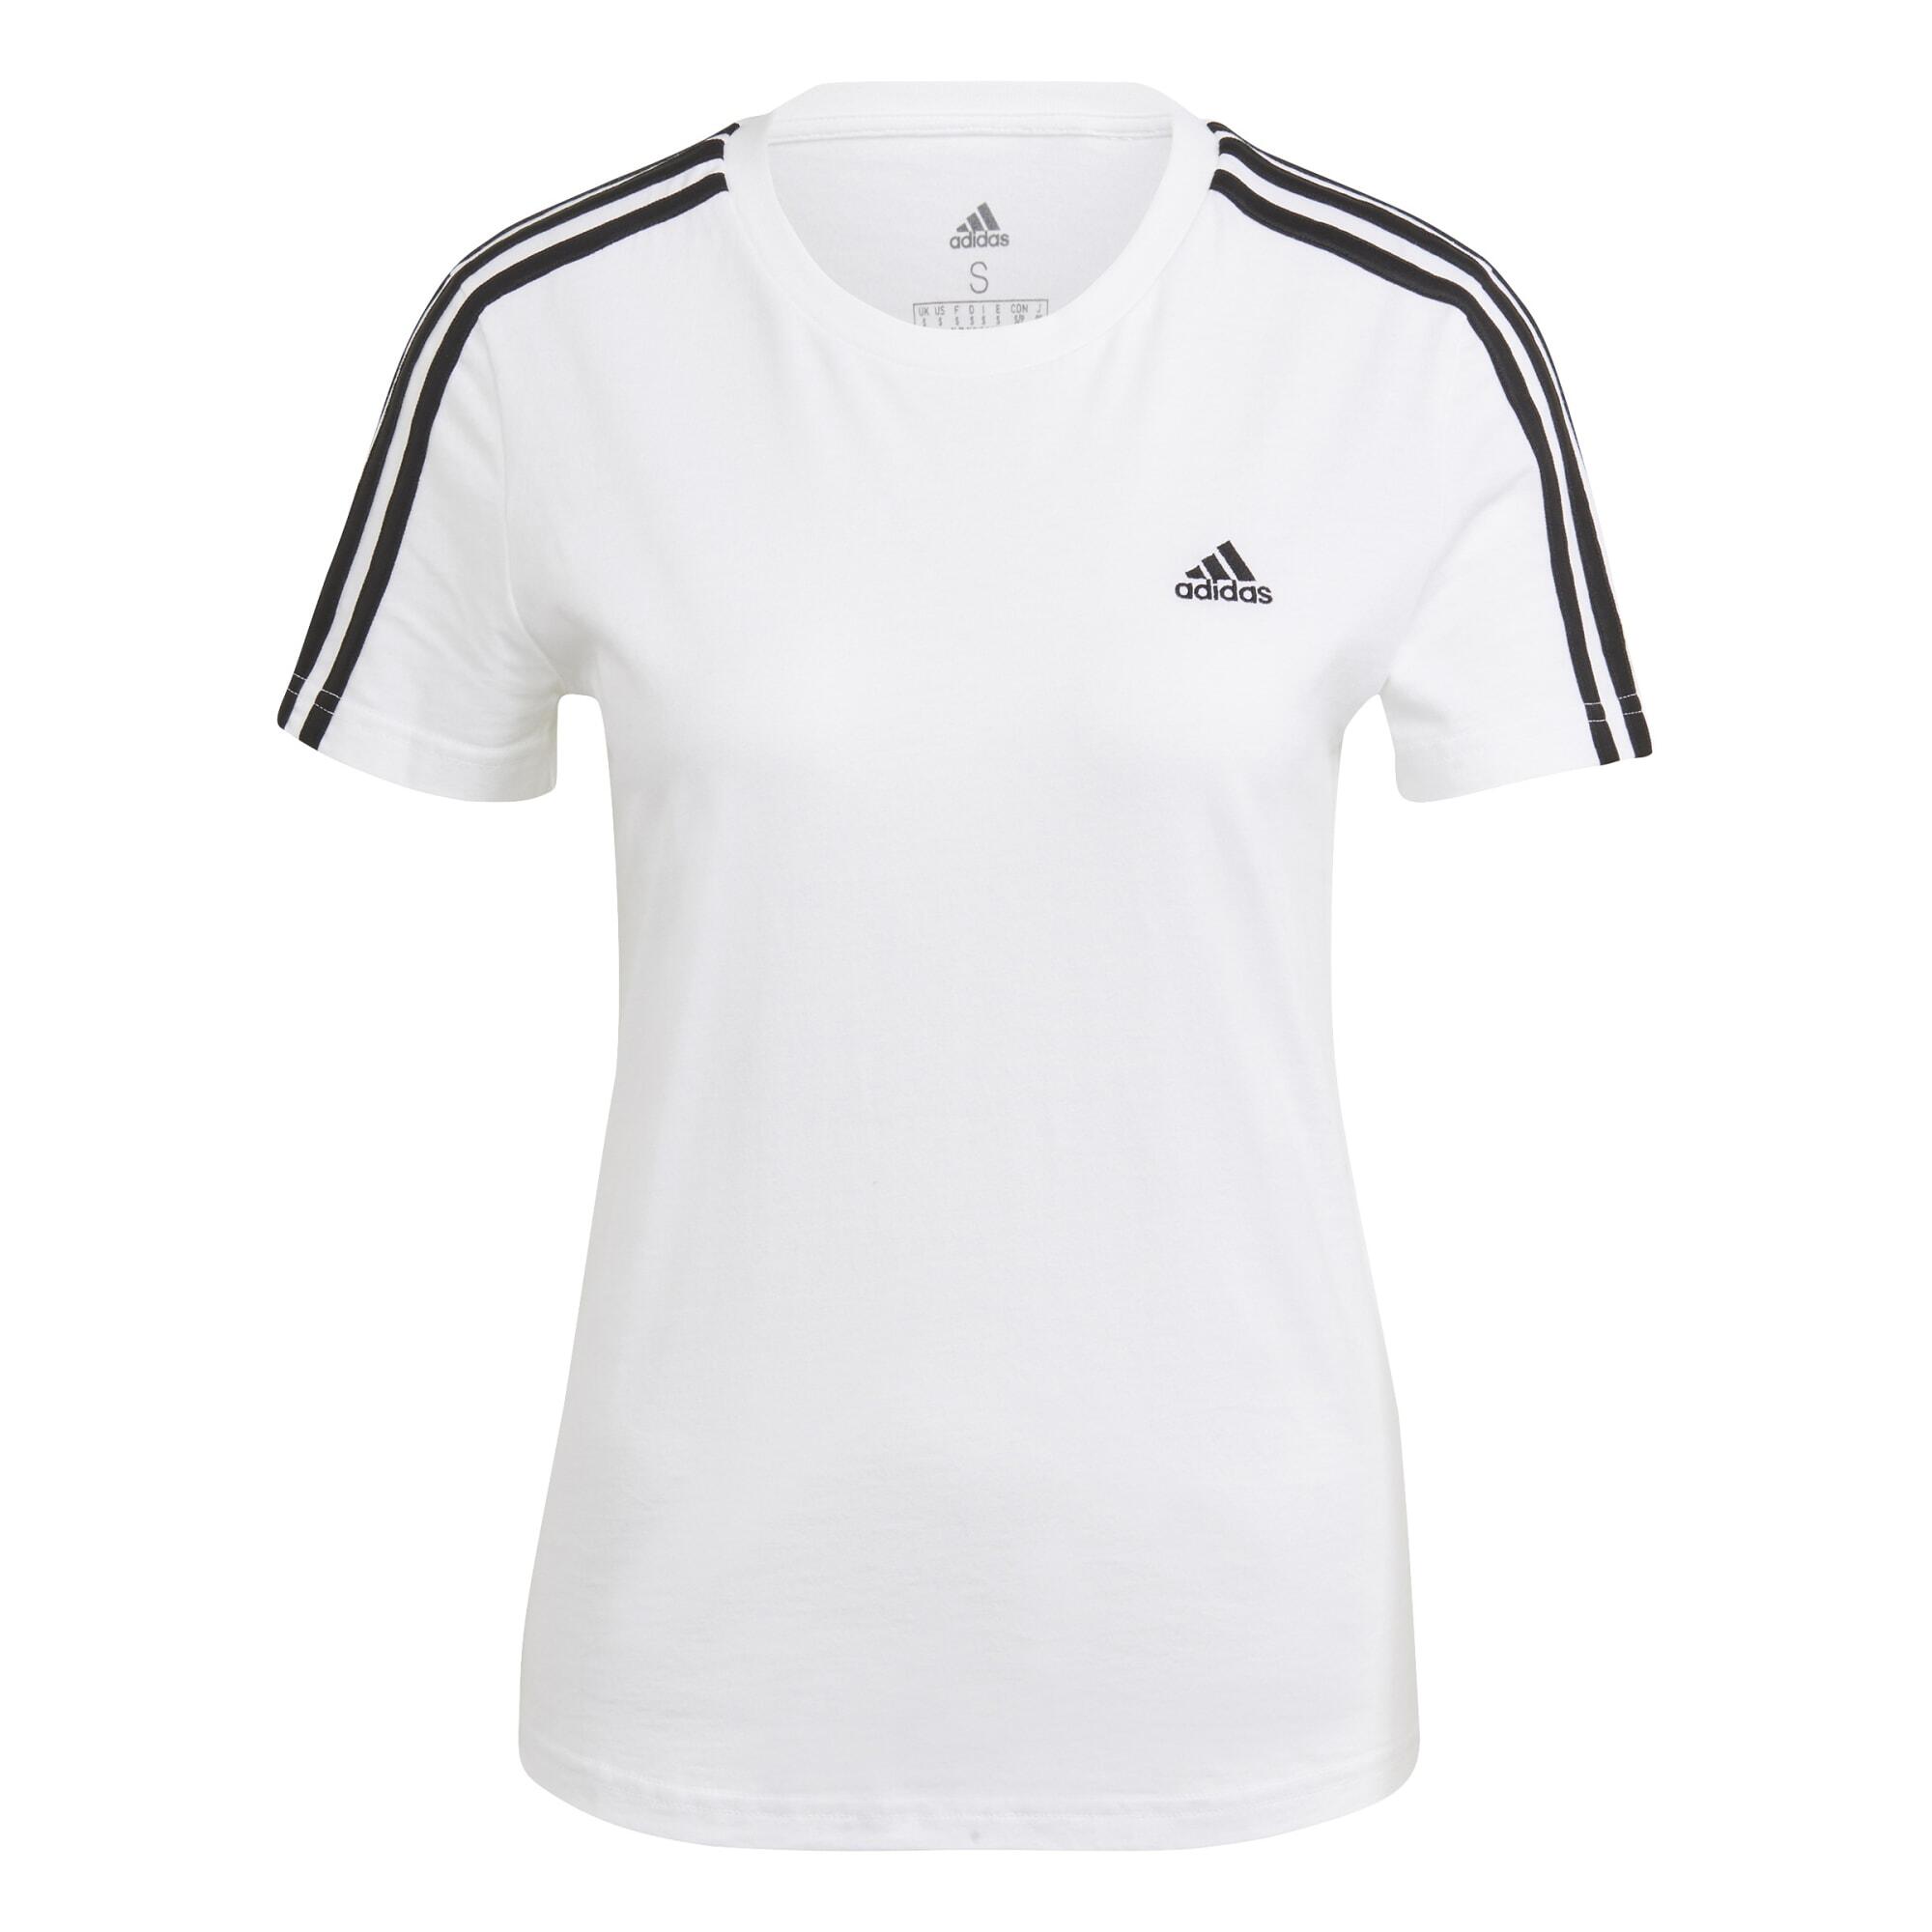 ADIDAS Women's Soft Training Fitness T-Shirt - White